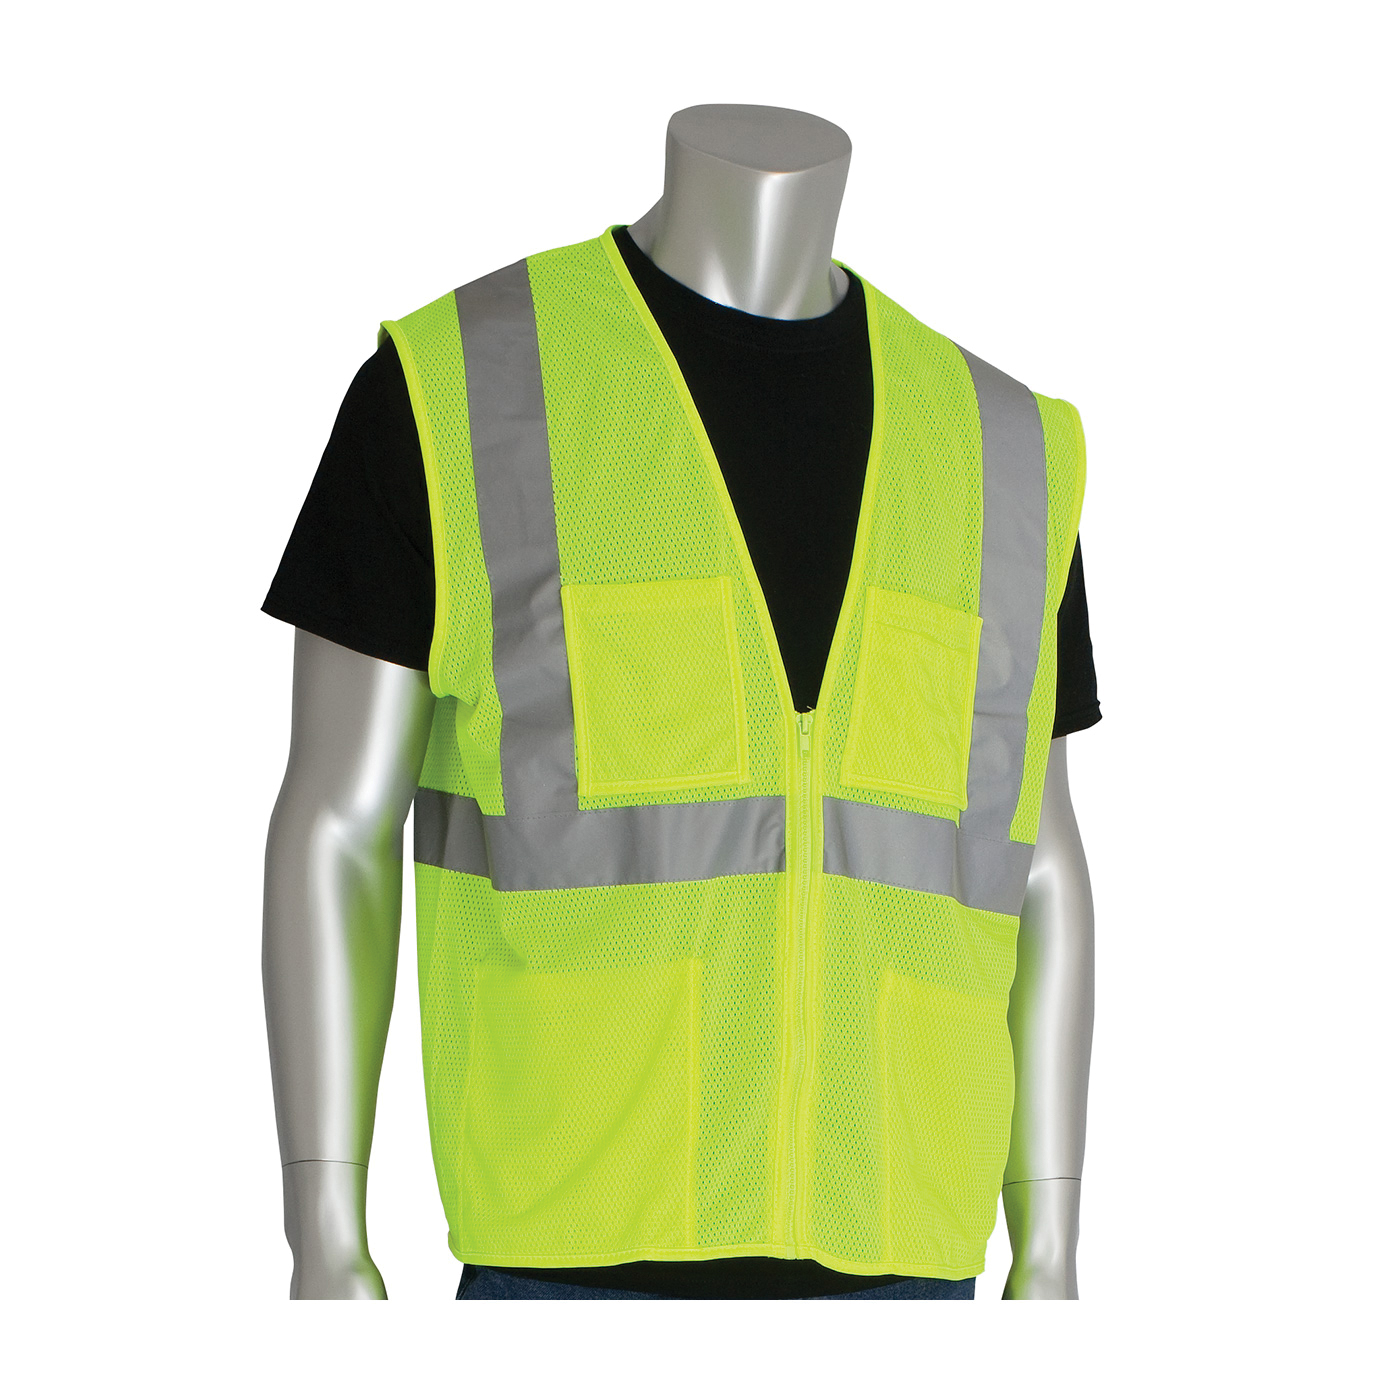 PIP® 302-MVGZ4PLY-2X Safety Vest, 2XL, Hi-Viz Lime Yellow, Polyester Mesh, Zipper Closure, 4 Pockets, ANSI Class: Class 2, Specifications Met: ANSI 107 Type R